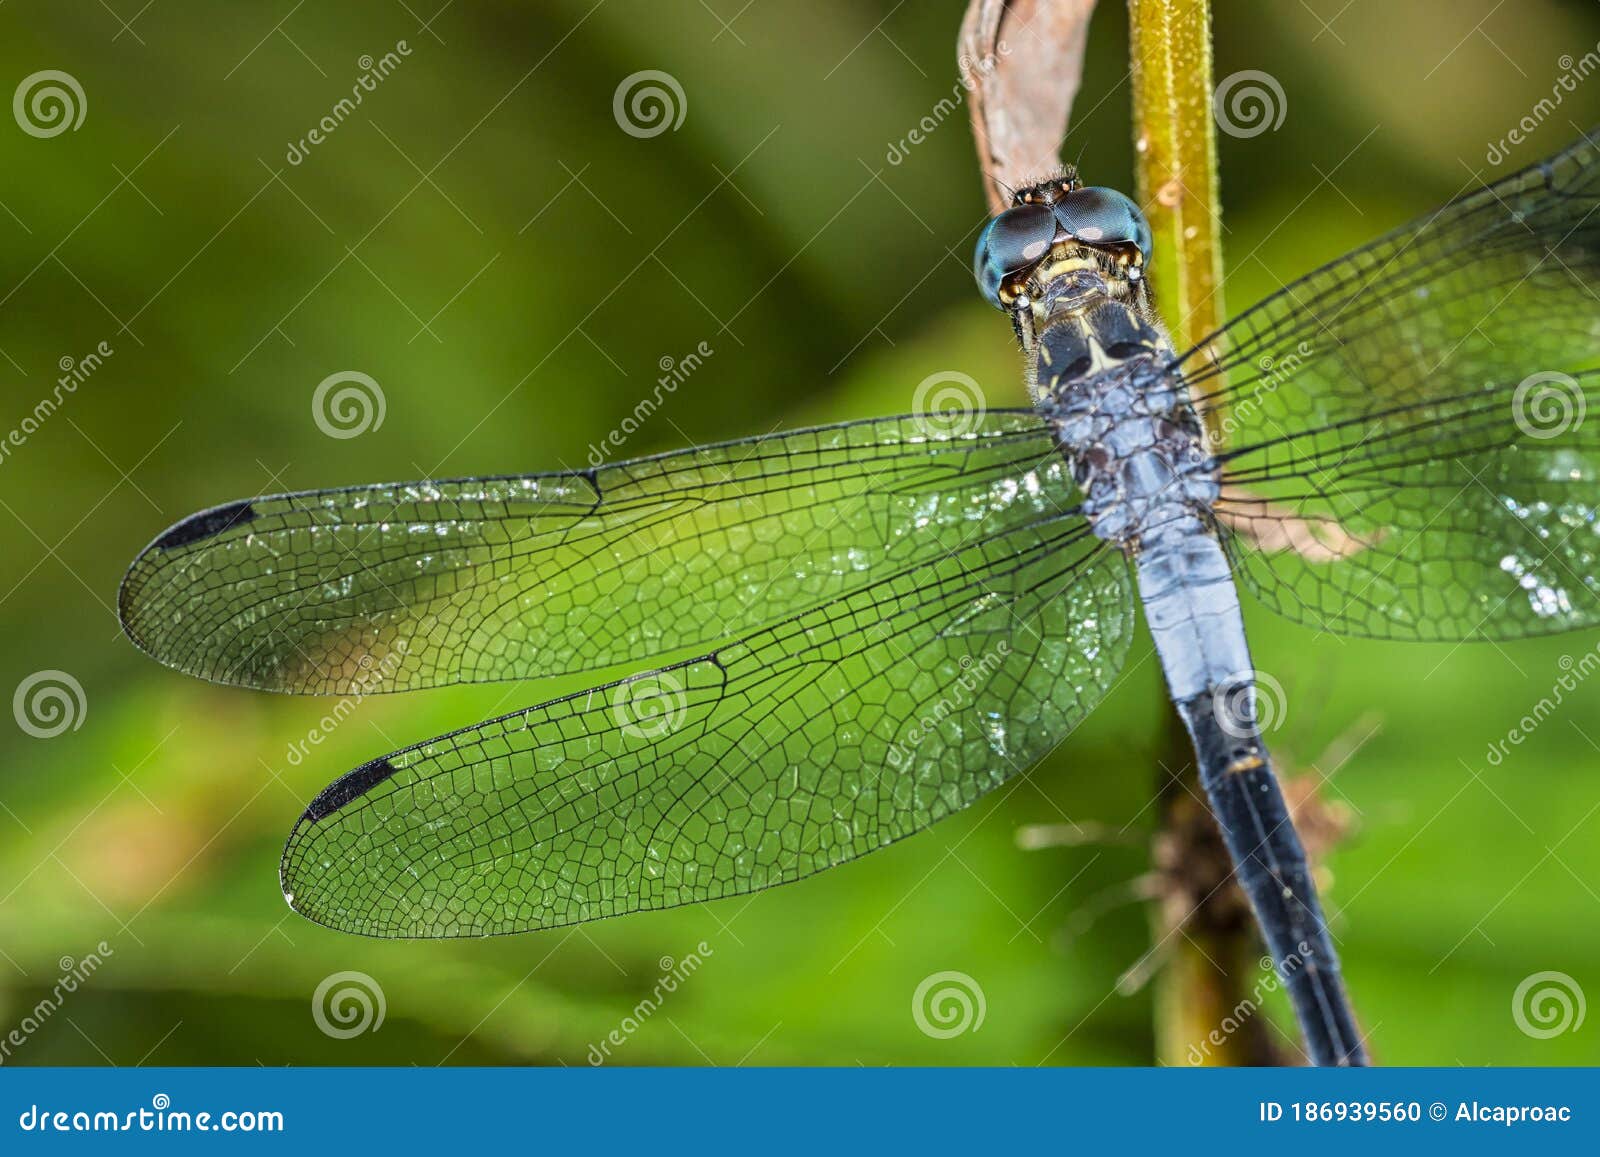 dragonfly, tropical rainforest, marino ballena national park